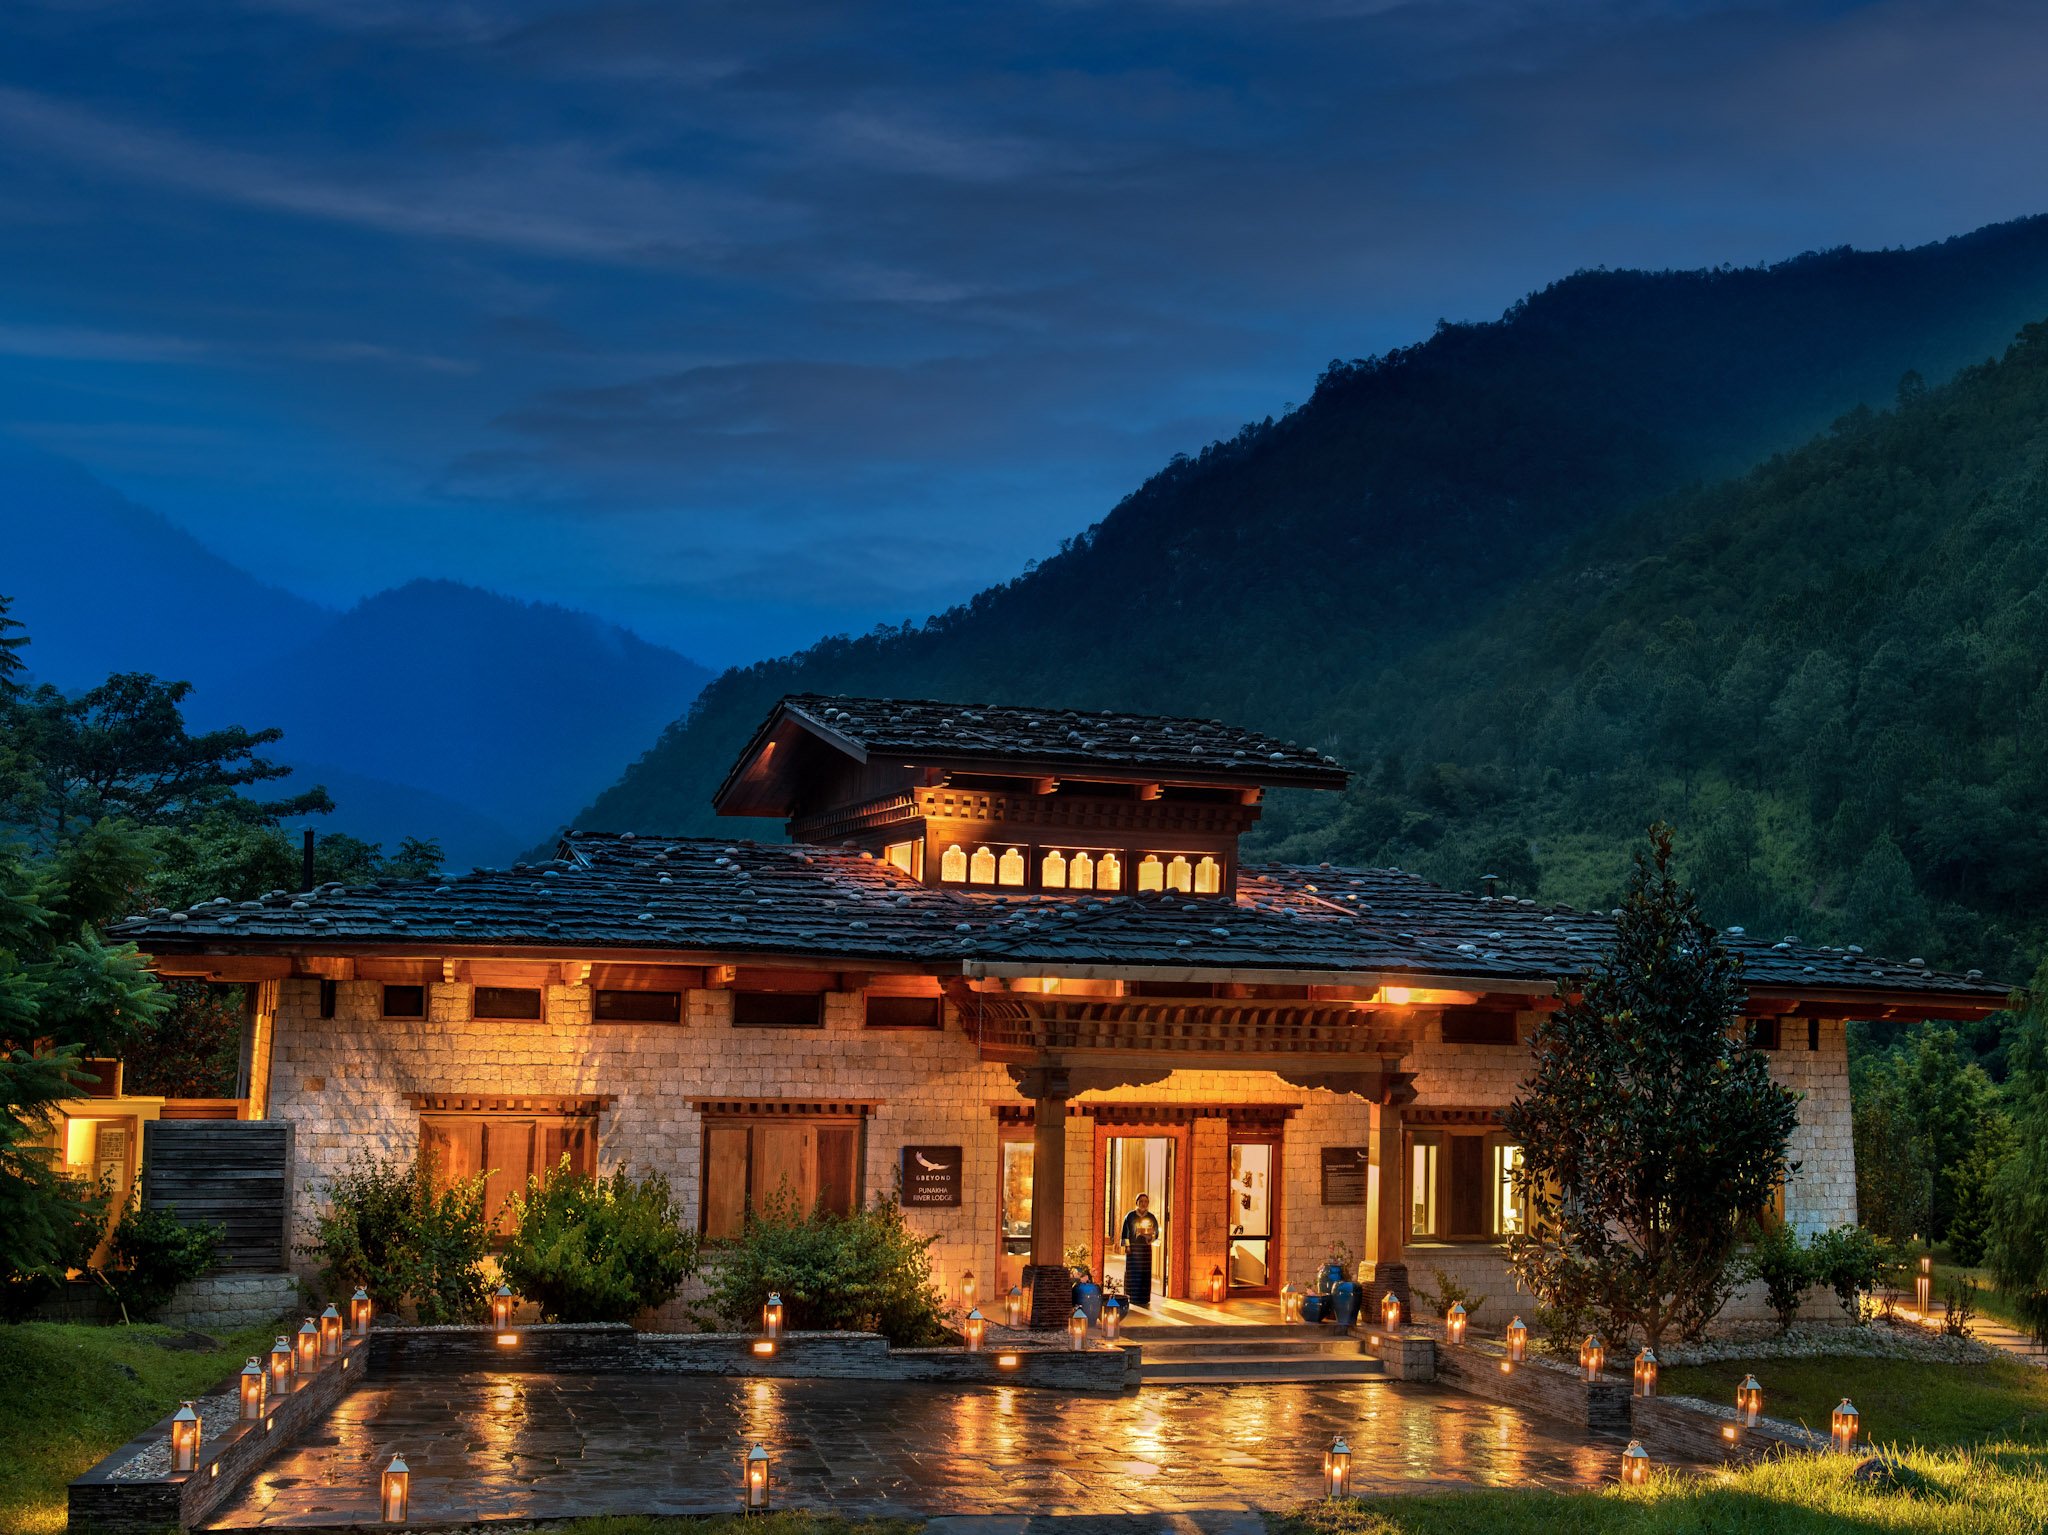 6-Bhutan-Punakha-River-Lodge-Guest-Arrival_1.jpg